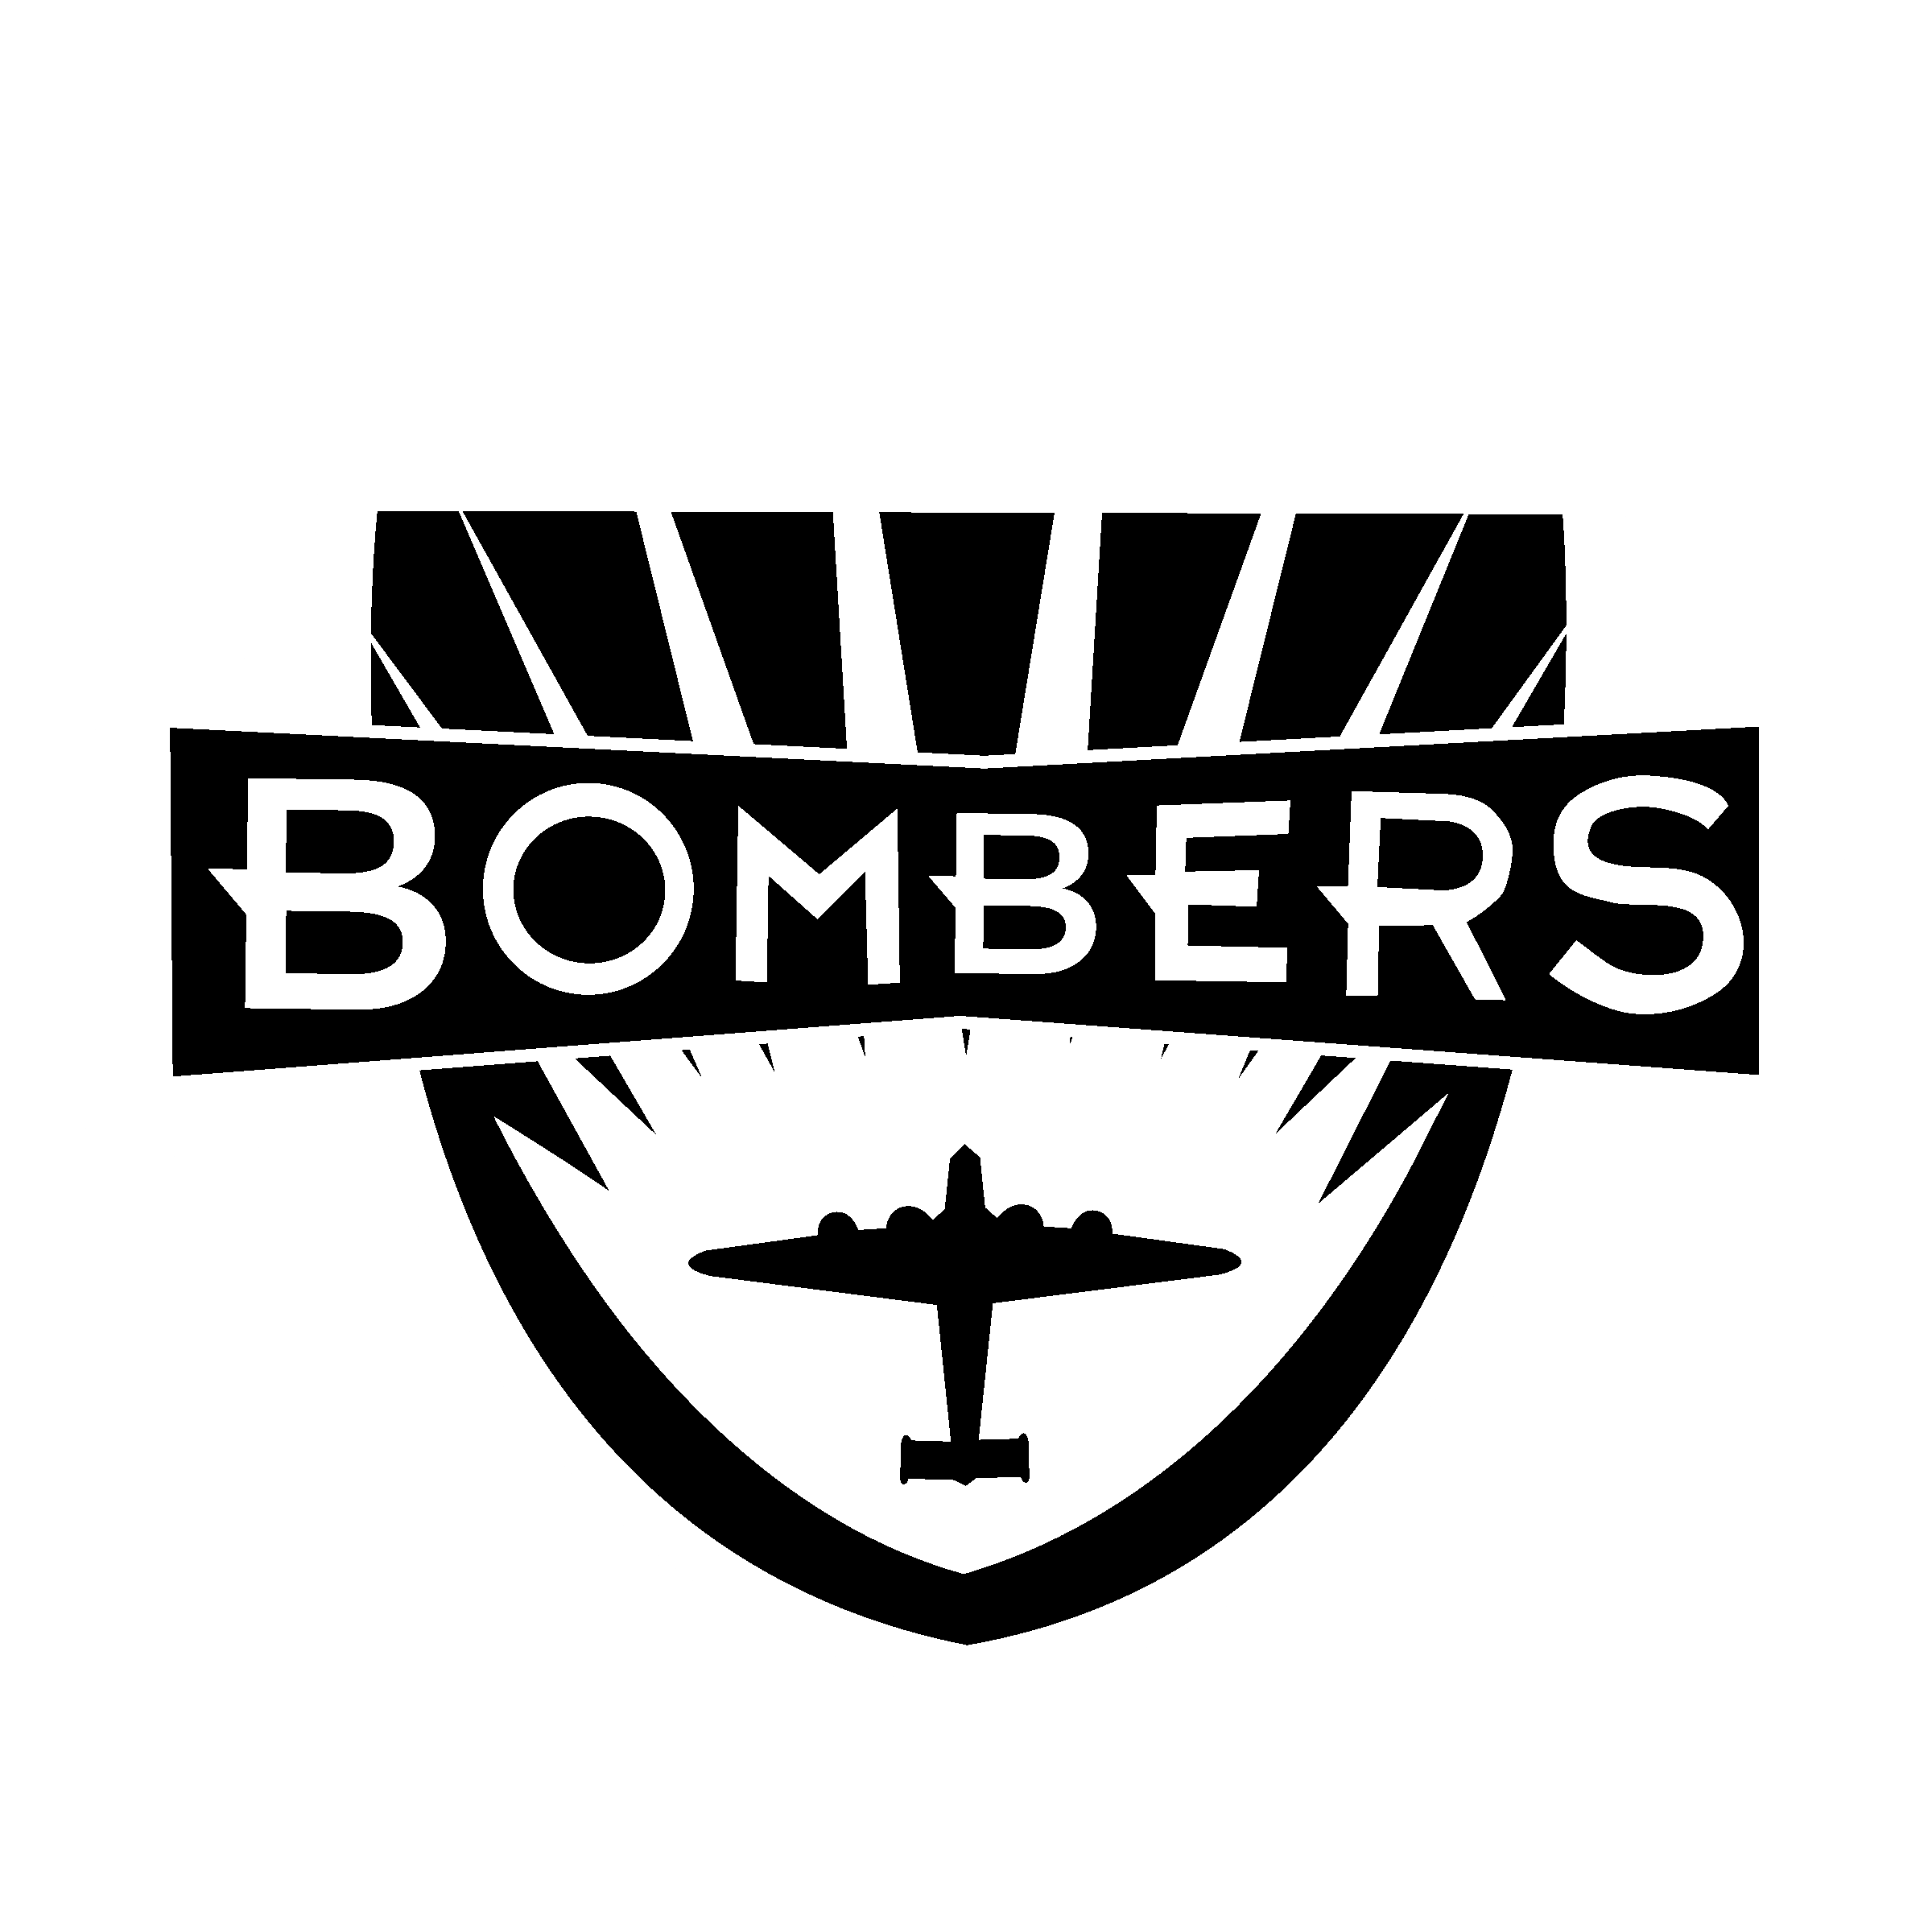 Bombers Logo - Baltimore Bombers Logo PNG Transparent & SVG Vector